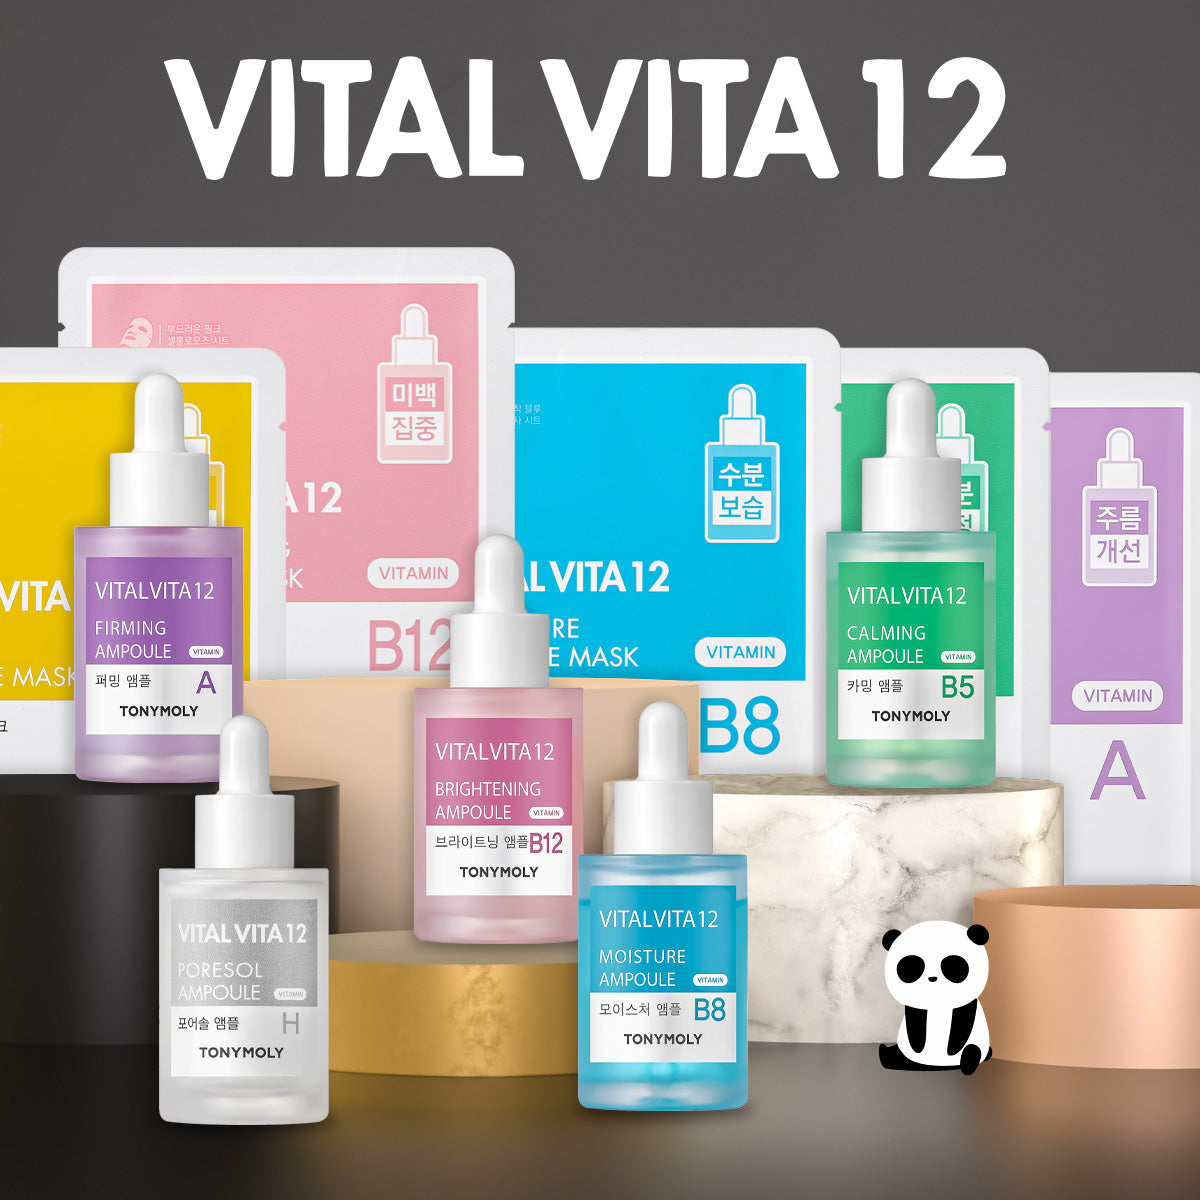 TONYMOLY Vital Vita 12 - Pore Care Ampoule 30ml | Korean Skin Care